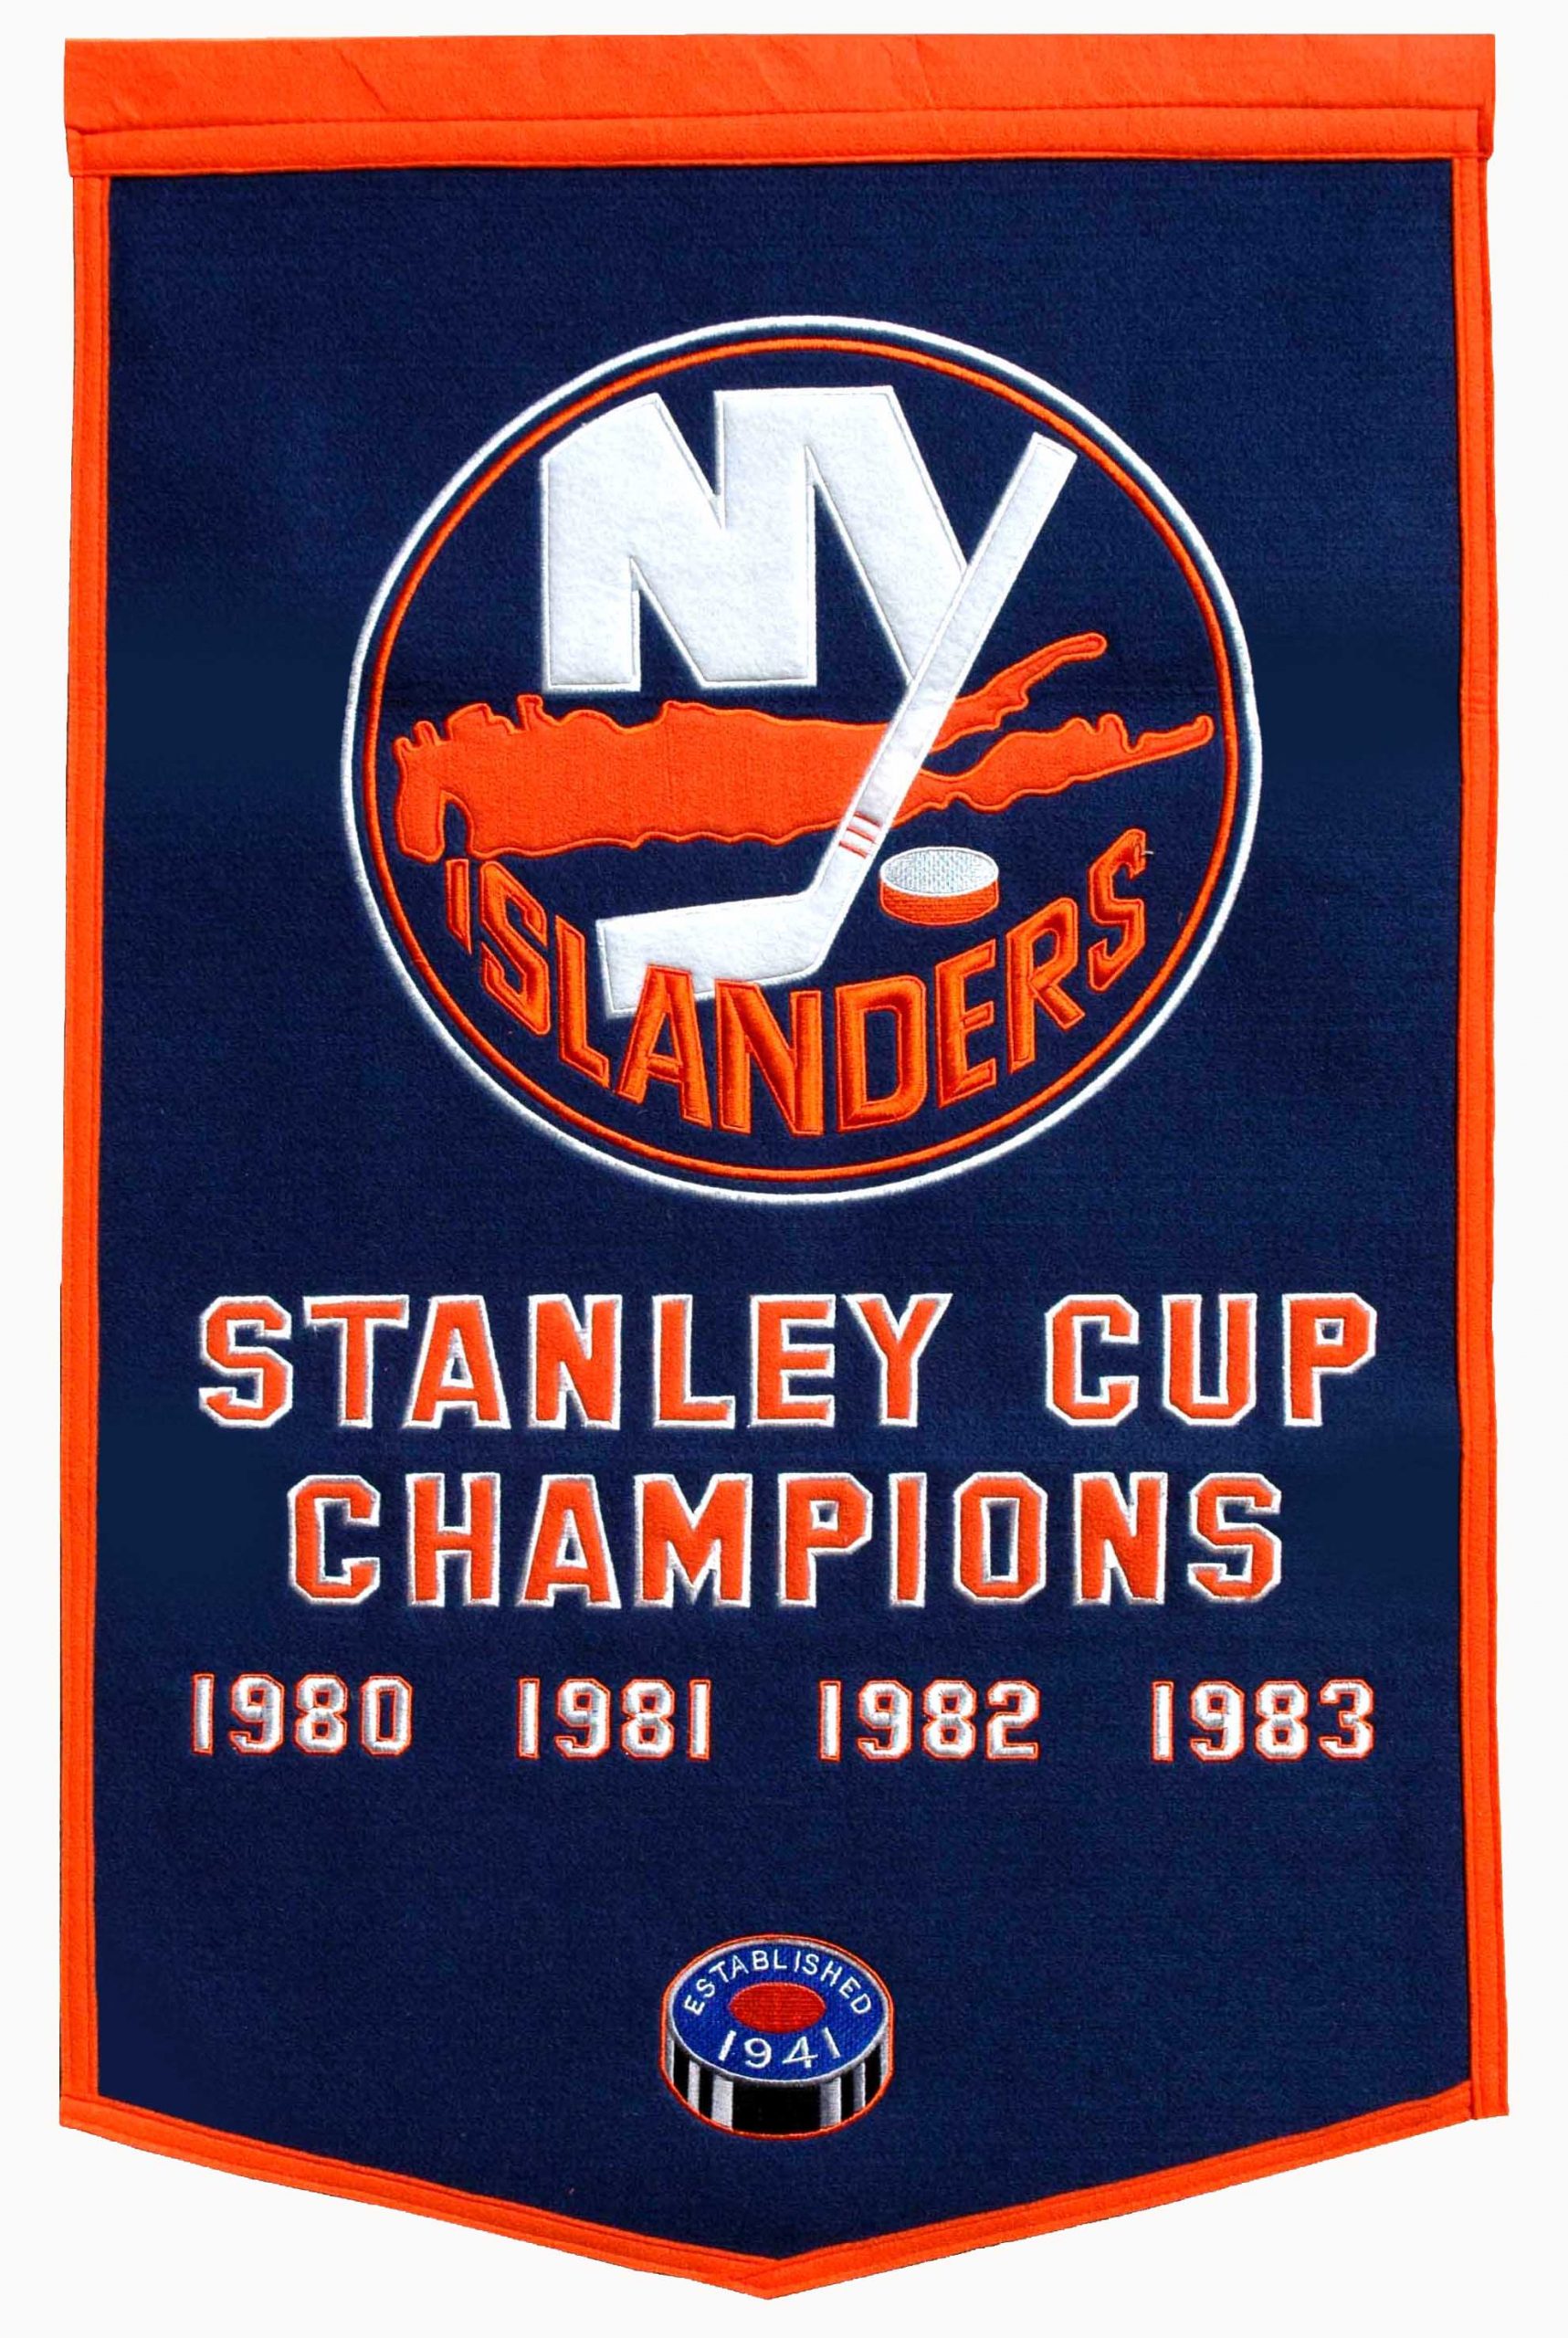 https://www.gpssportsgallery.com/wp-content/uploads/imported/78070-New-York-Islanders-Banner-scaled.jpg